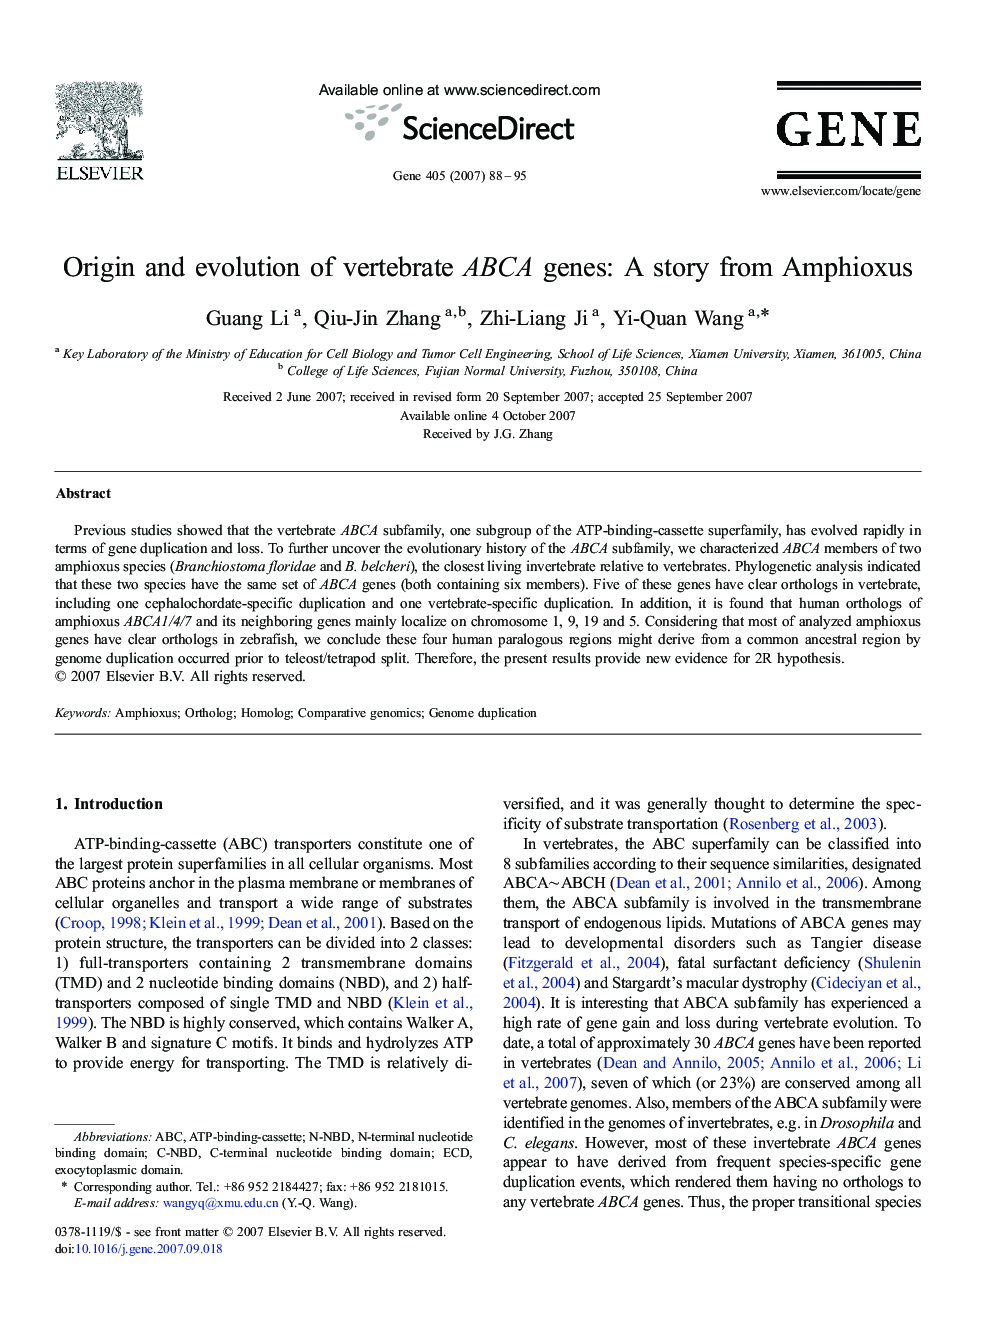 Origin and evolution of vertebrate ABCA genes: A story from Amphioxus